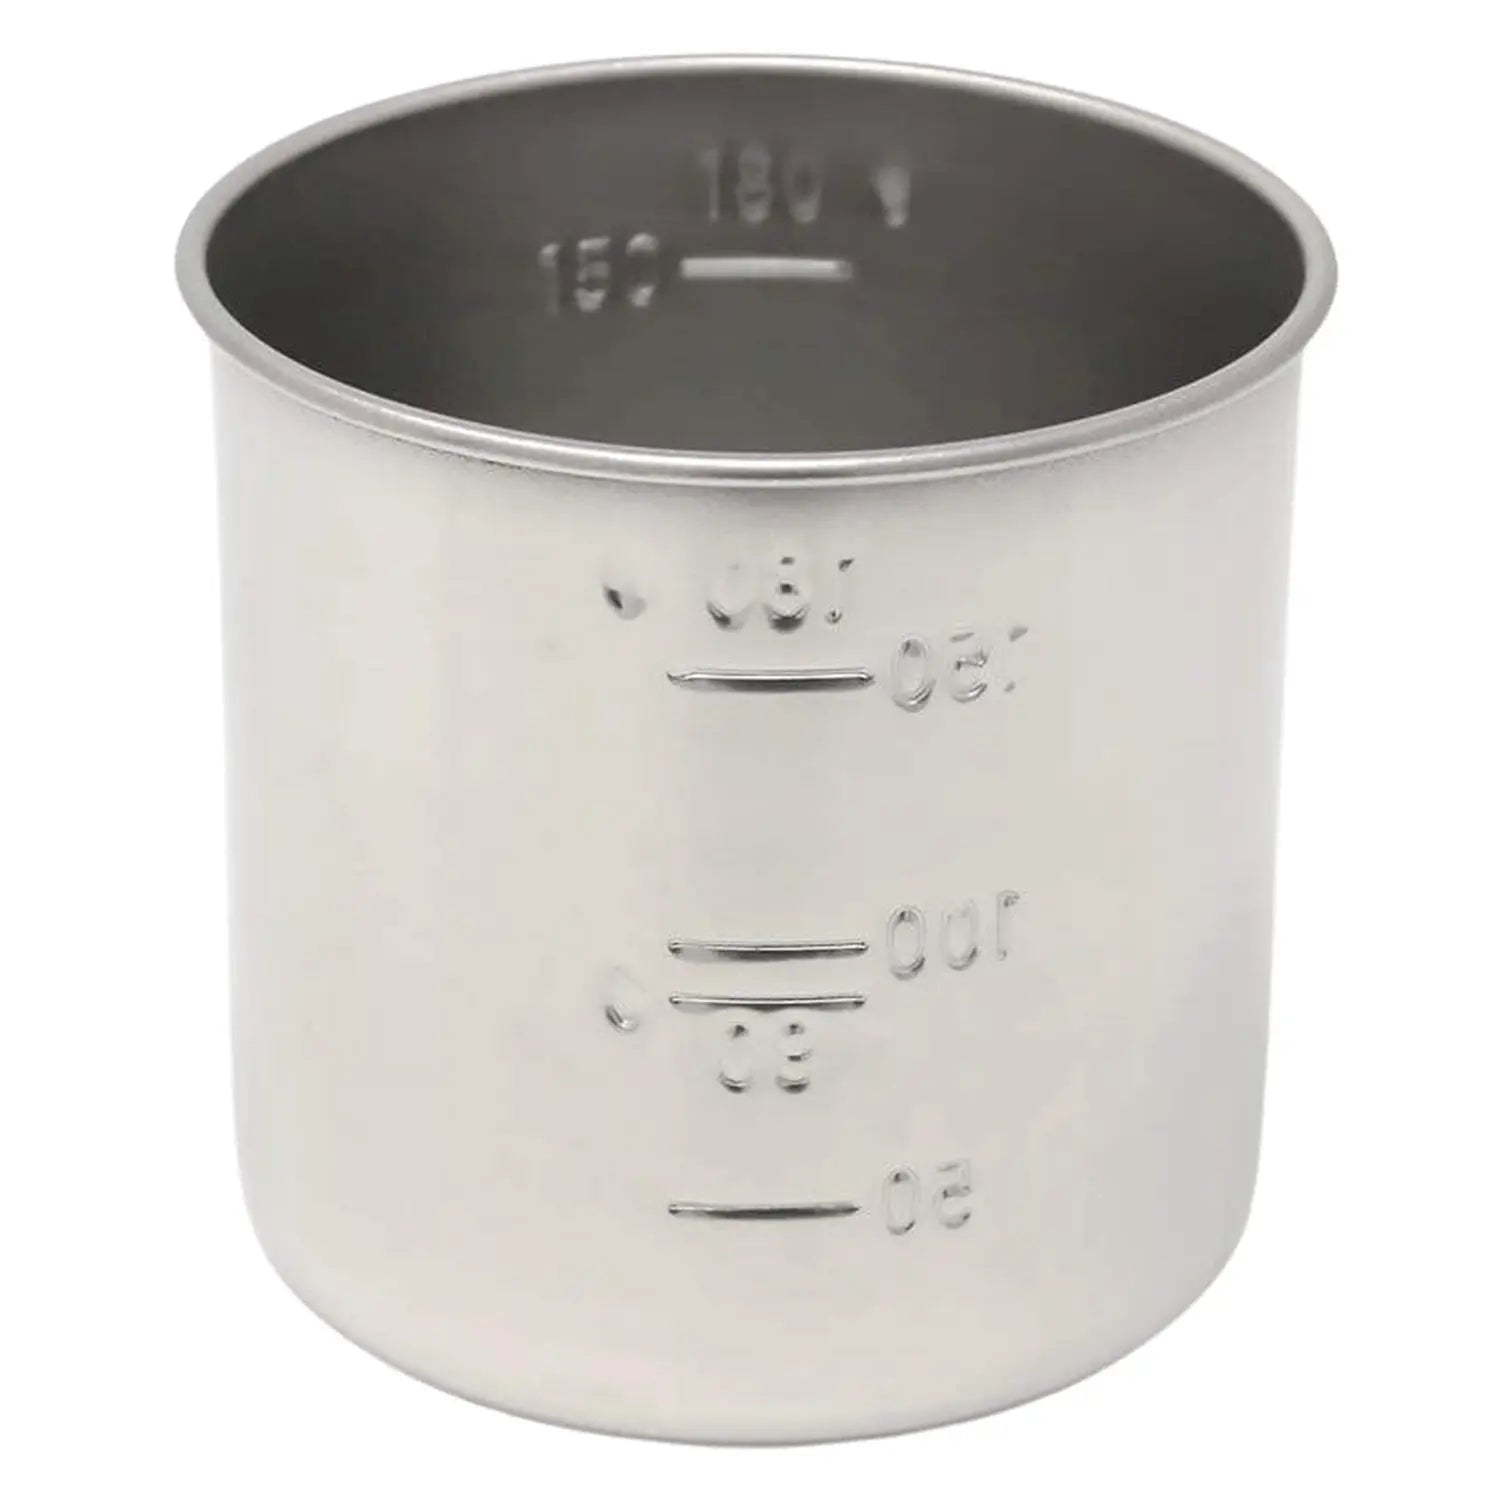 Measuring Cups Set, Stainless Steel Measure Cups, 18/8(304) Steel